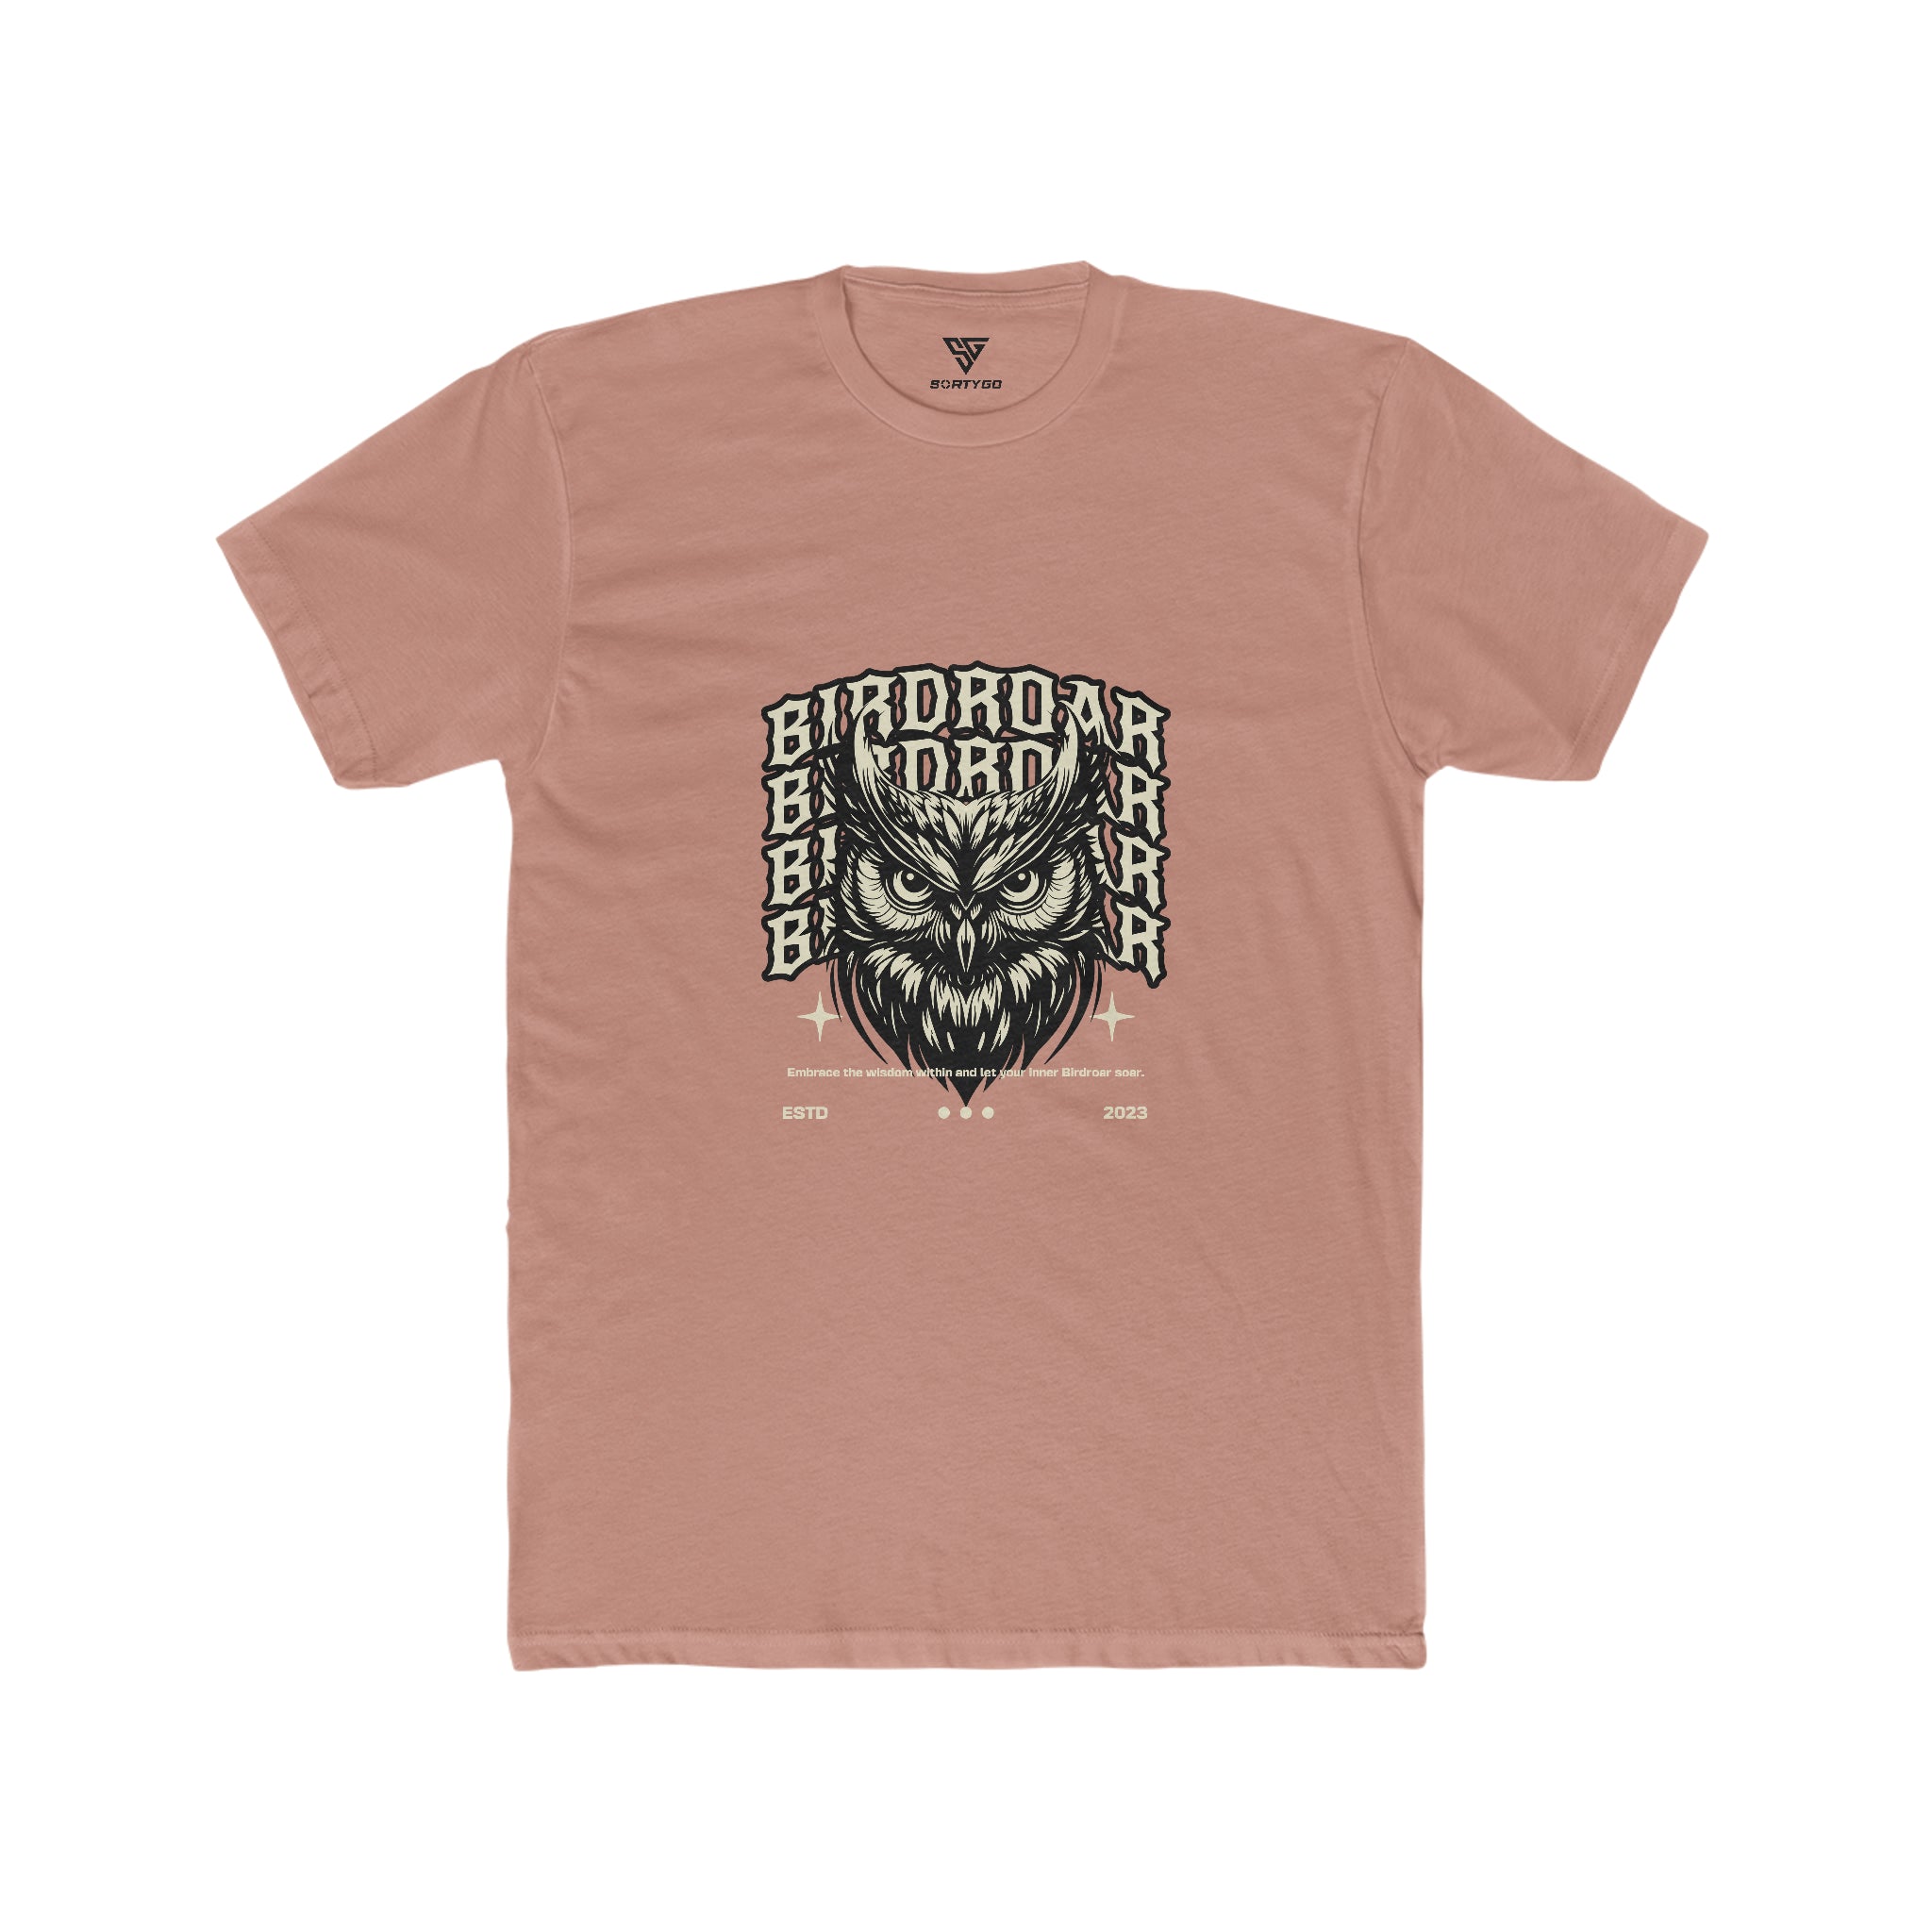 SORTYGO - Birdroar Men Fitted T-Shirt in Solid Desert Pink